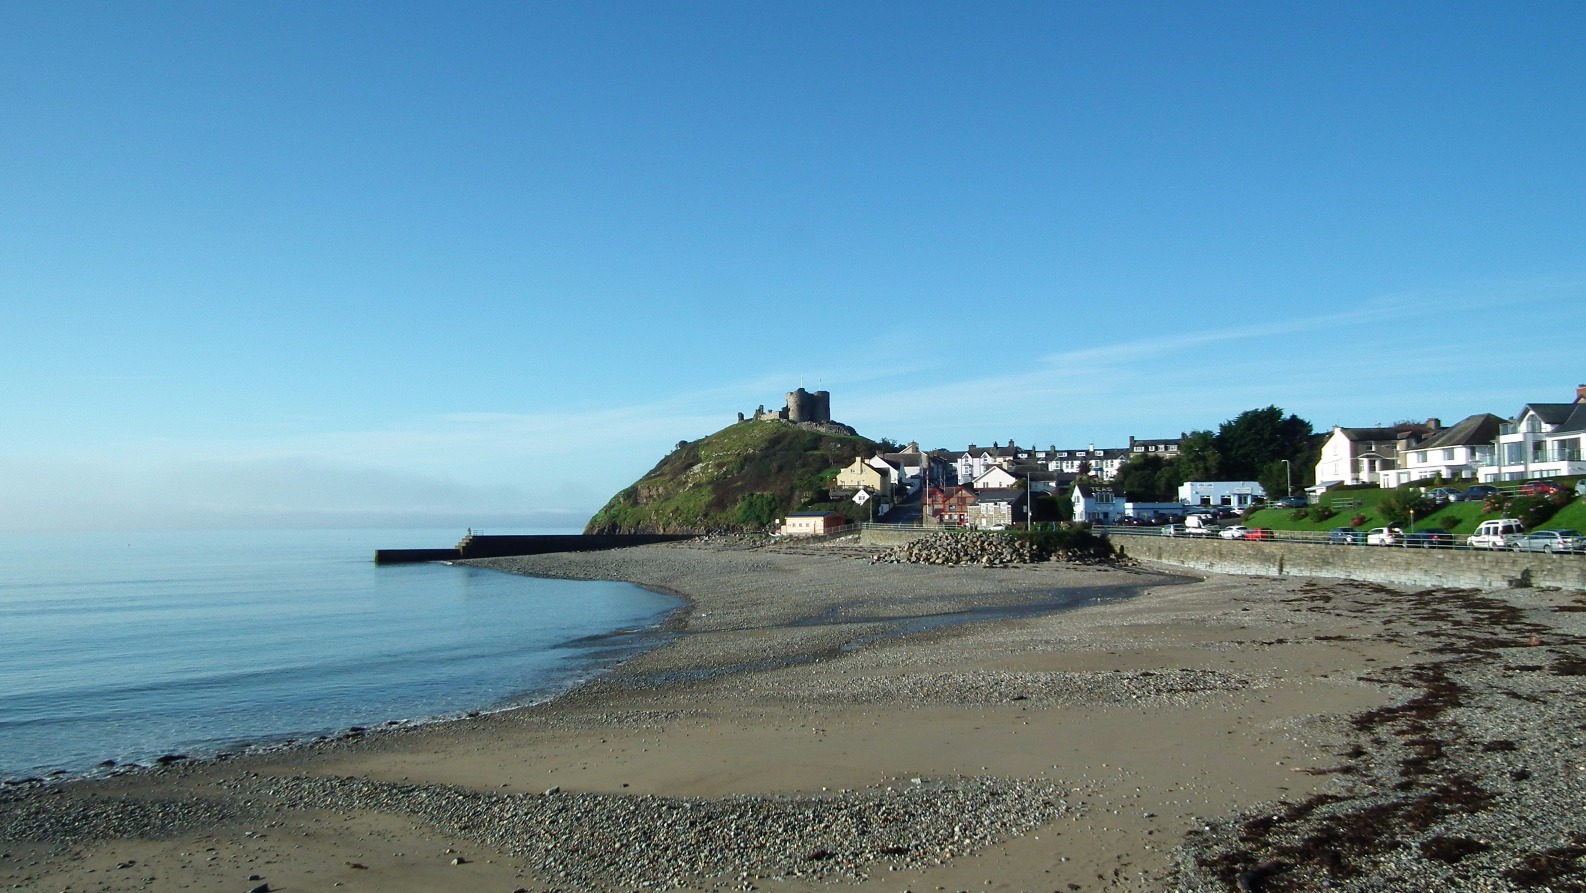 Criccieth Coast, Coast | Coastal | Sea | Water | Blue | Sky | Season | Scenery | Wales | Beauty | Sand